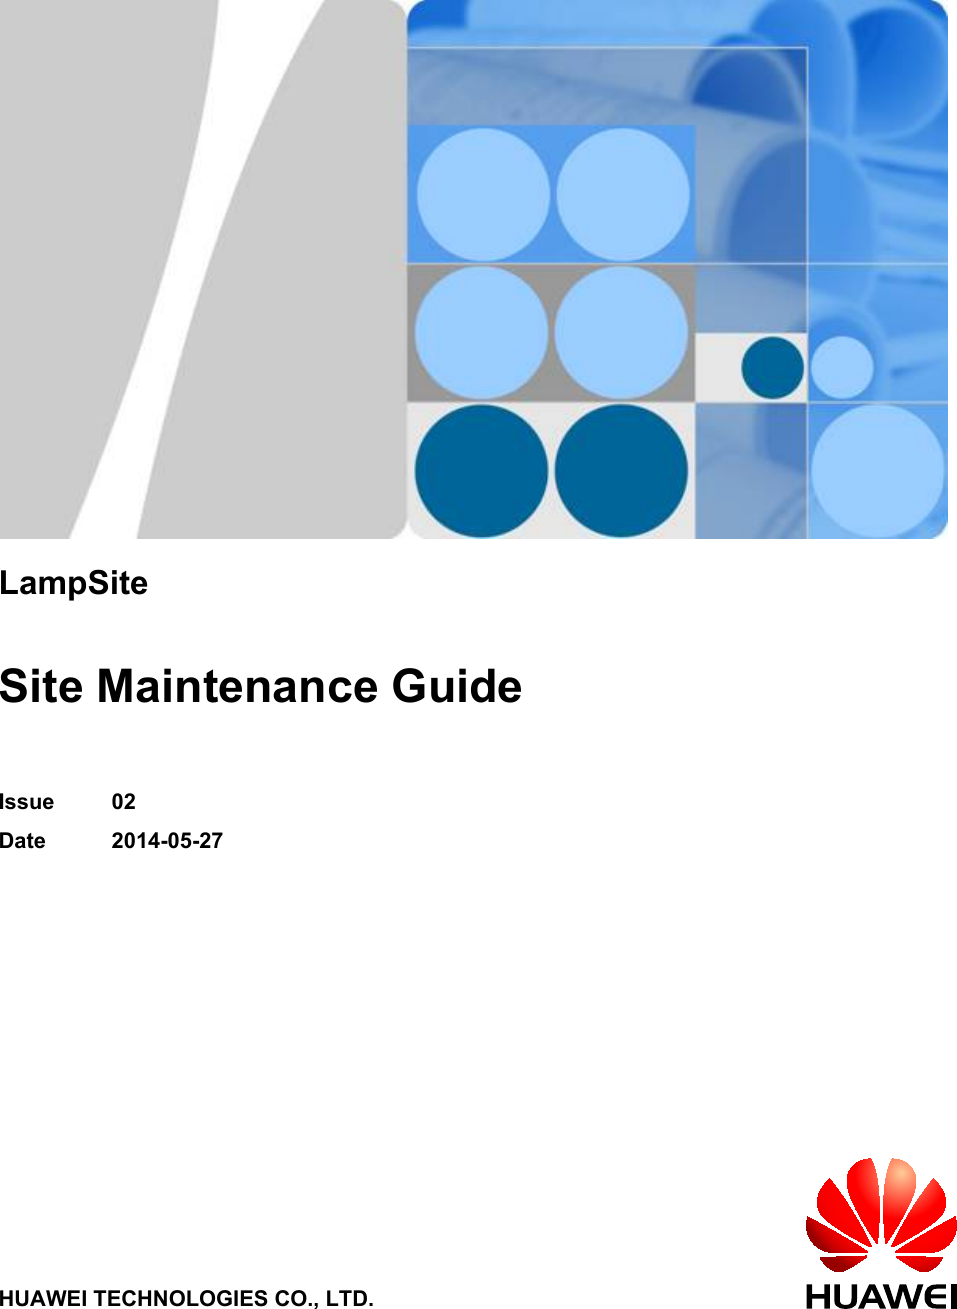 LampSiteSite Maintenance GuideIssue 02Date 2014-05-27HUAWEI TECHNOLOGIES CO., LTD.